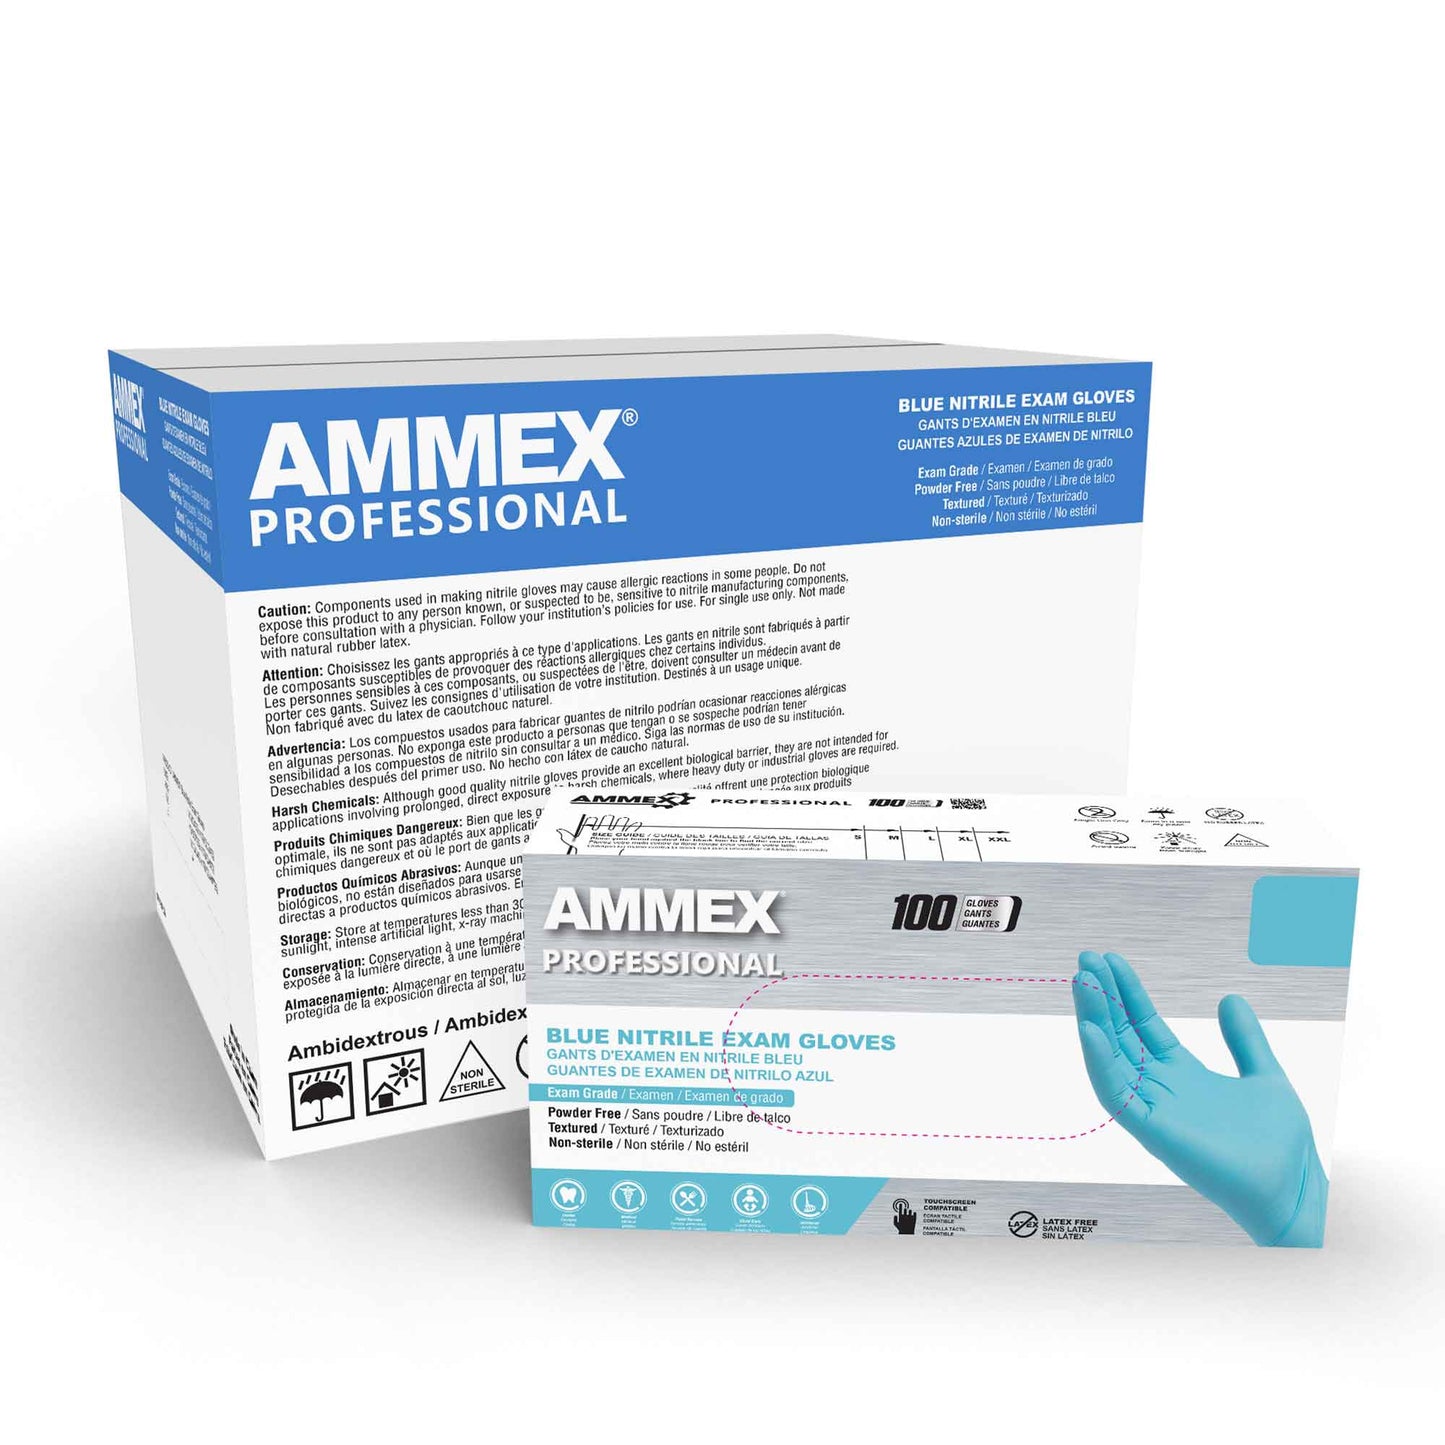 AMMEX Professional Light Blue Nitrile, Small, Box of 100